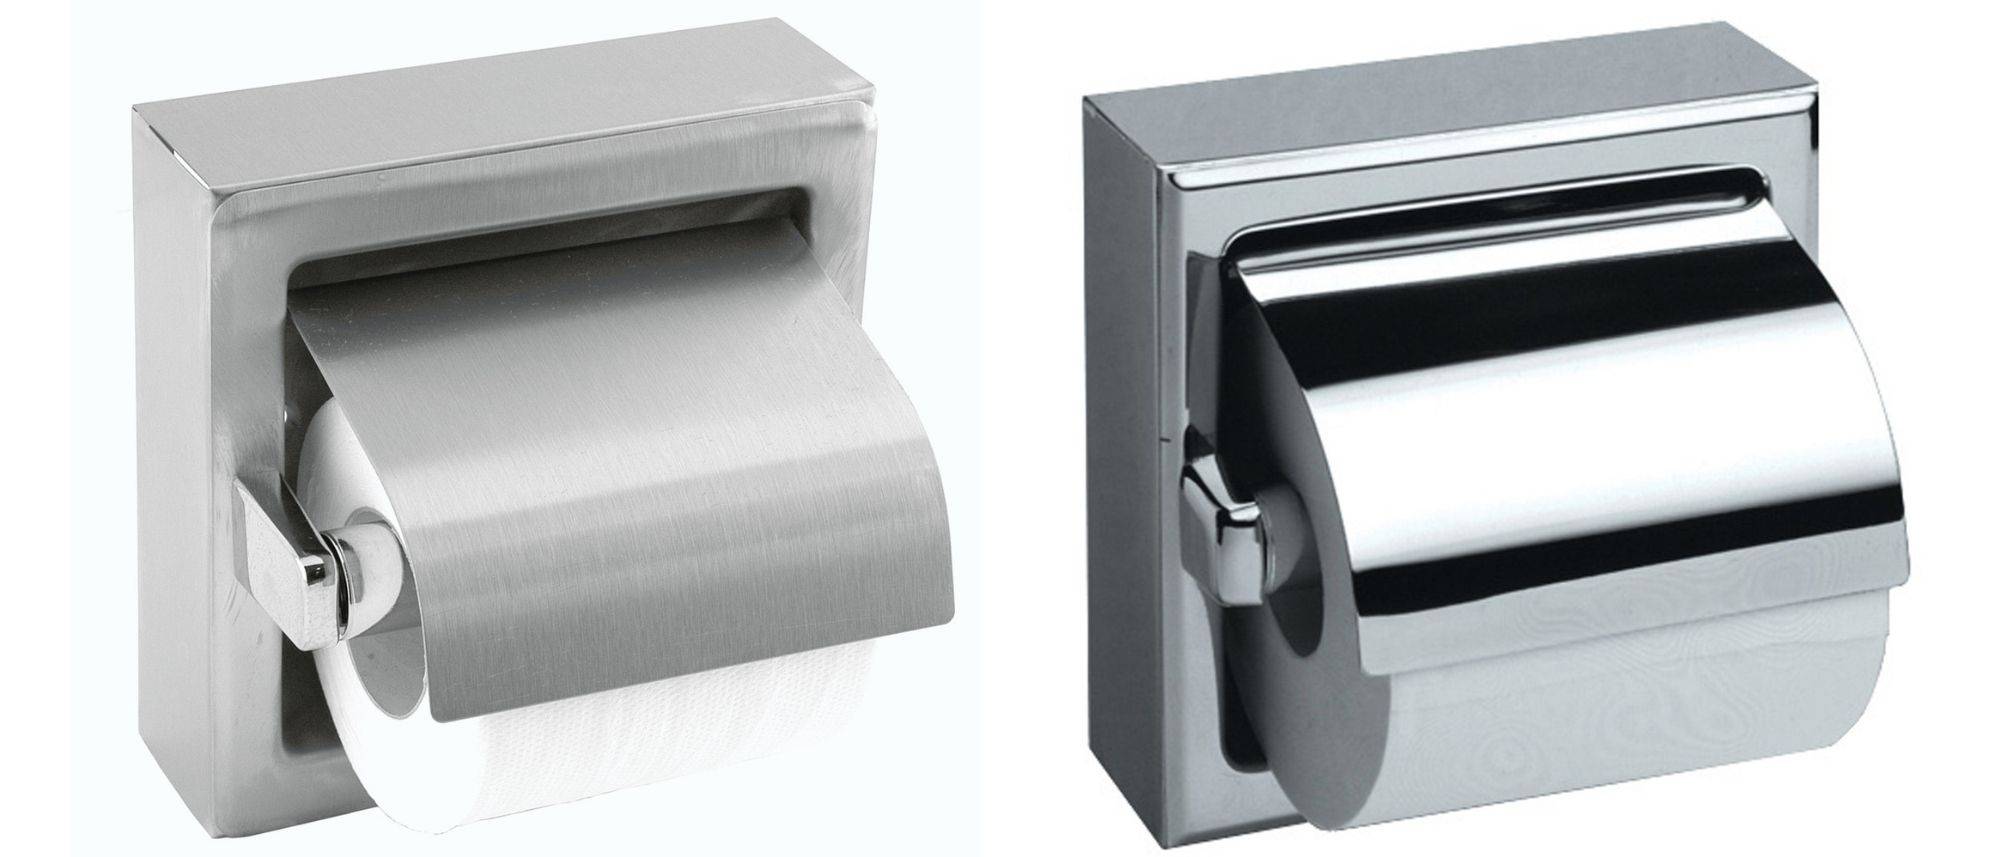 Mediclinics Stainless Steel Toilet Roll Holder